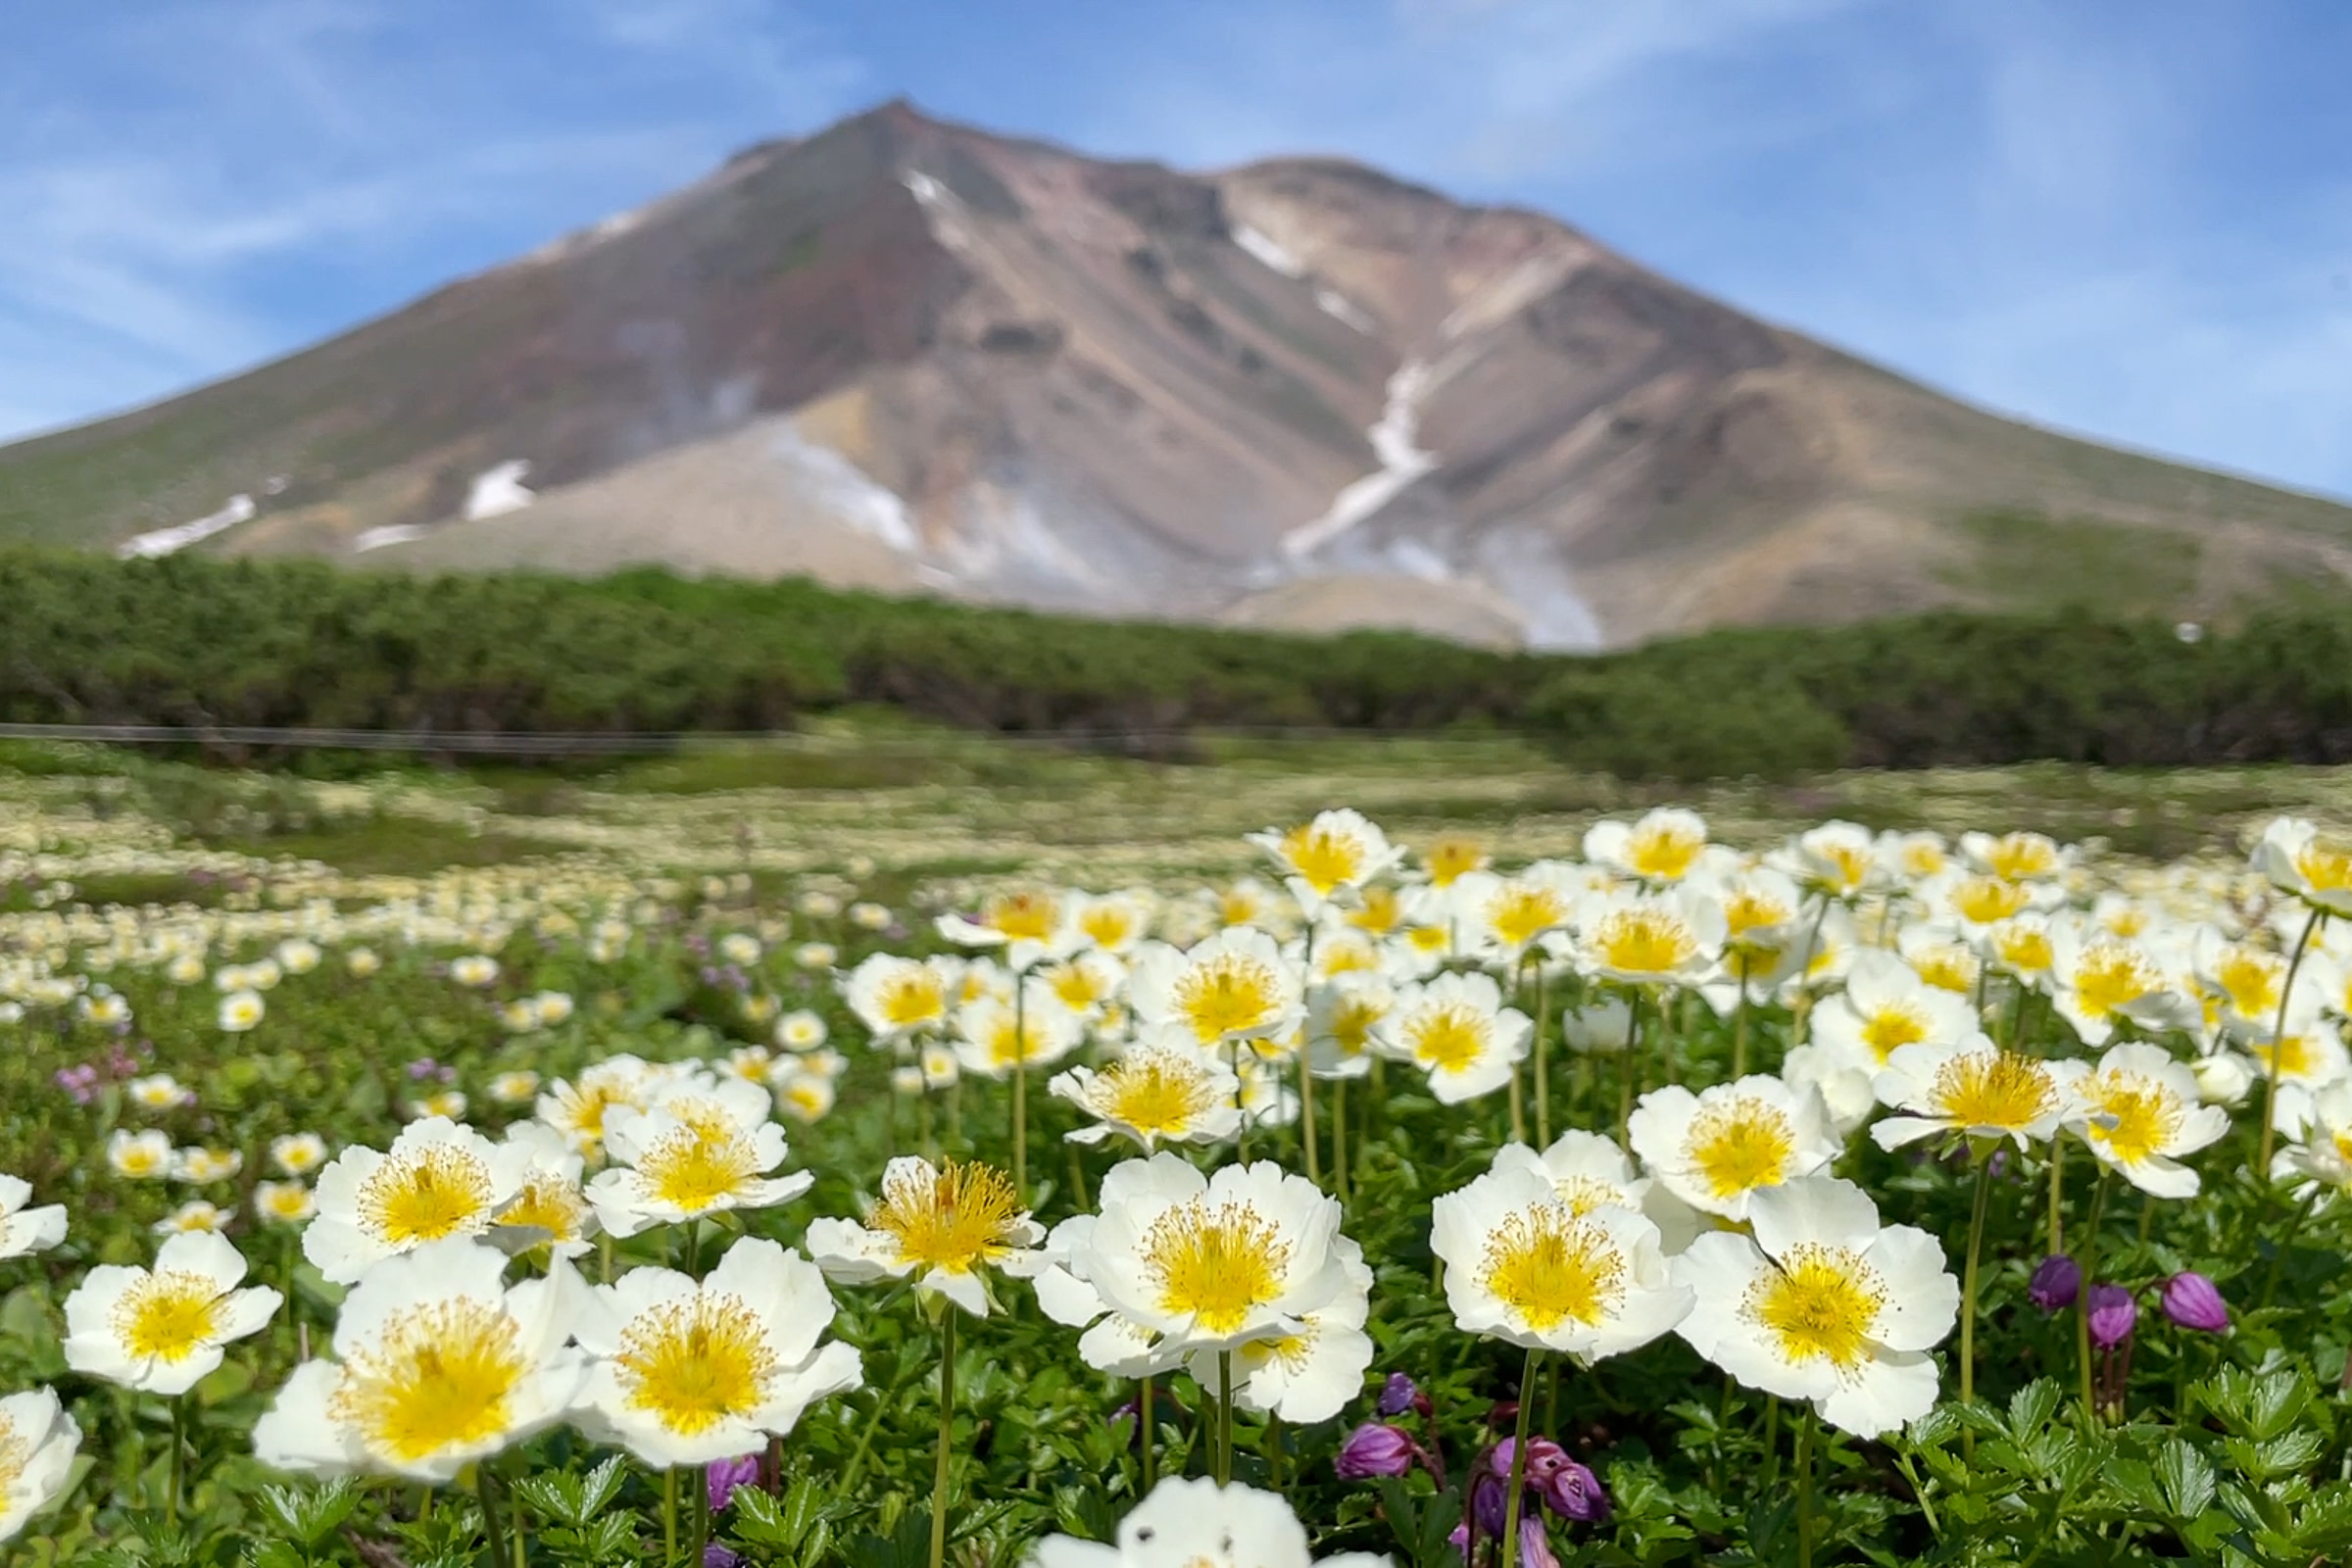 Aleutian Avens in bloom in July at the base of Mt. Asahidake.